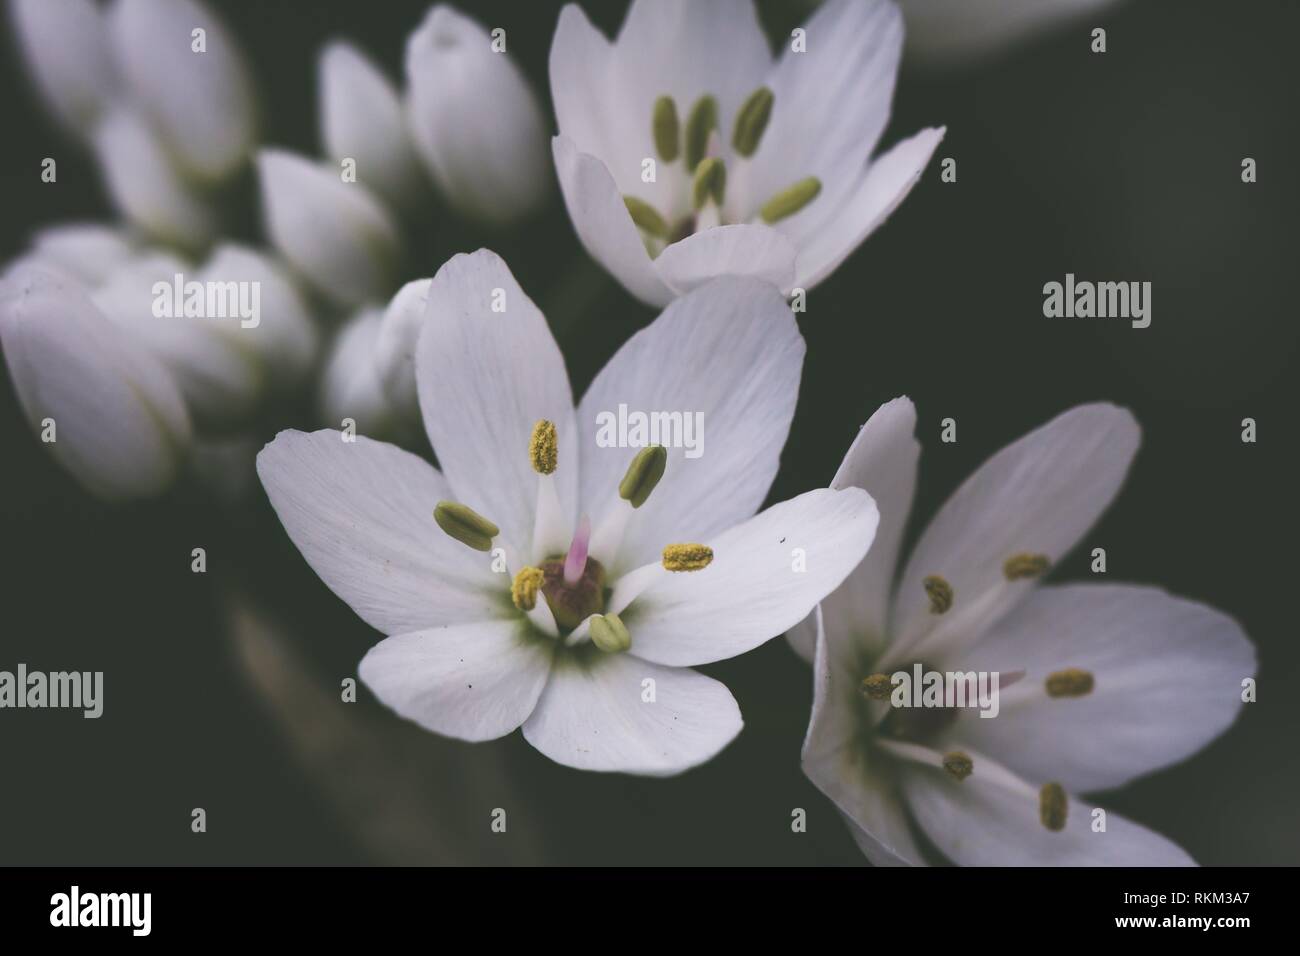 Small white delicate Allium flowers. Stock Photo